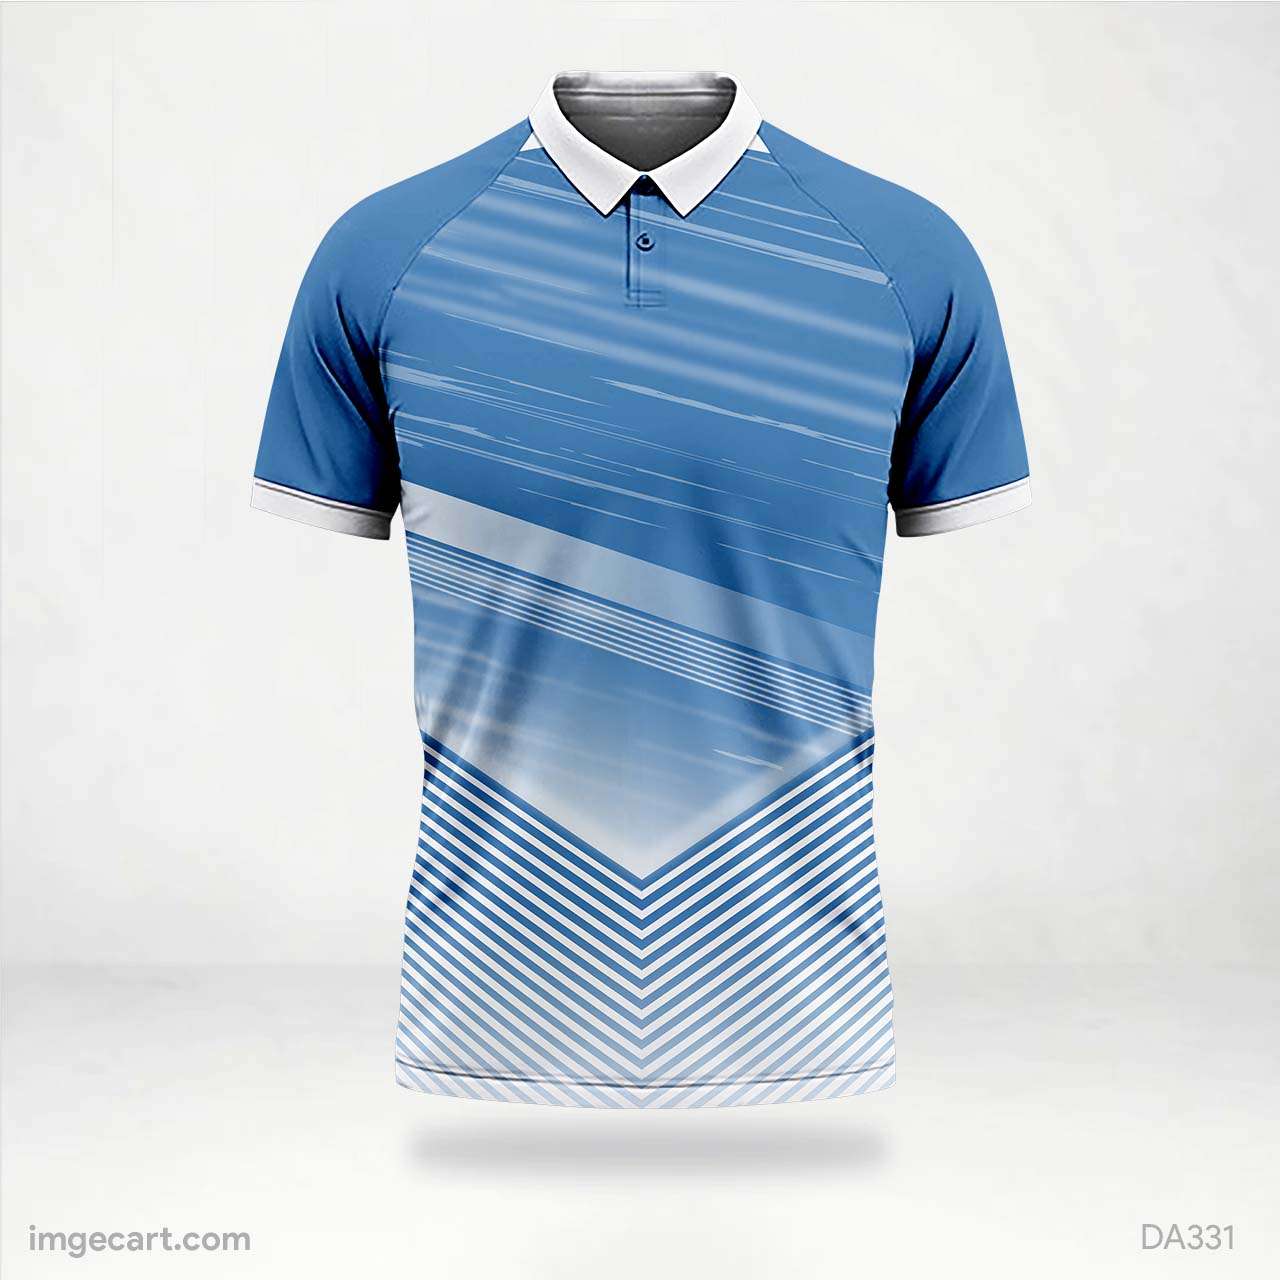 E-sports Jersey Design blue with pattern - imgecart